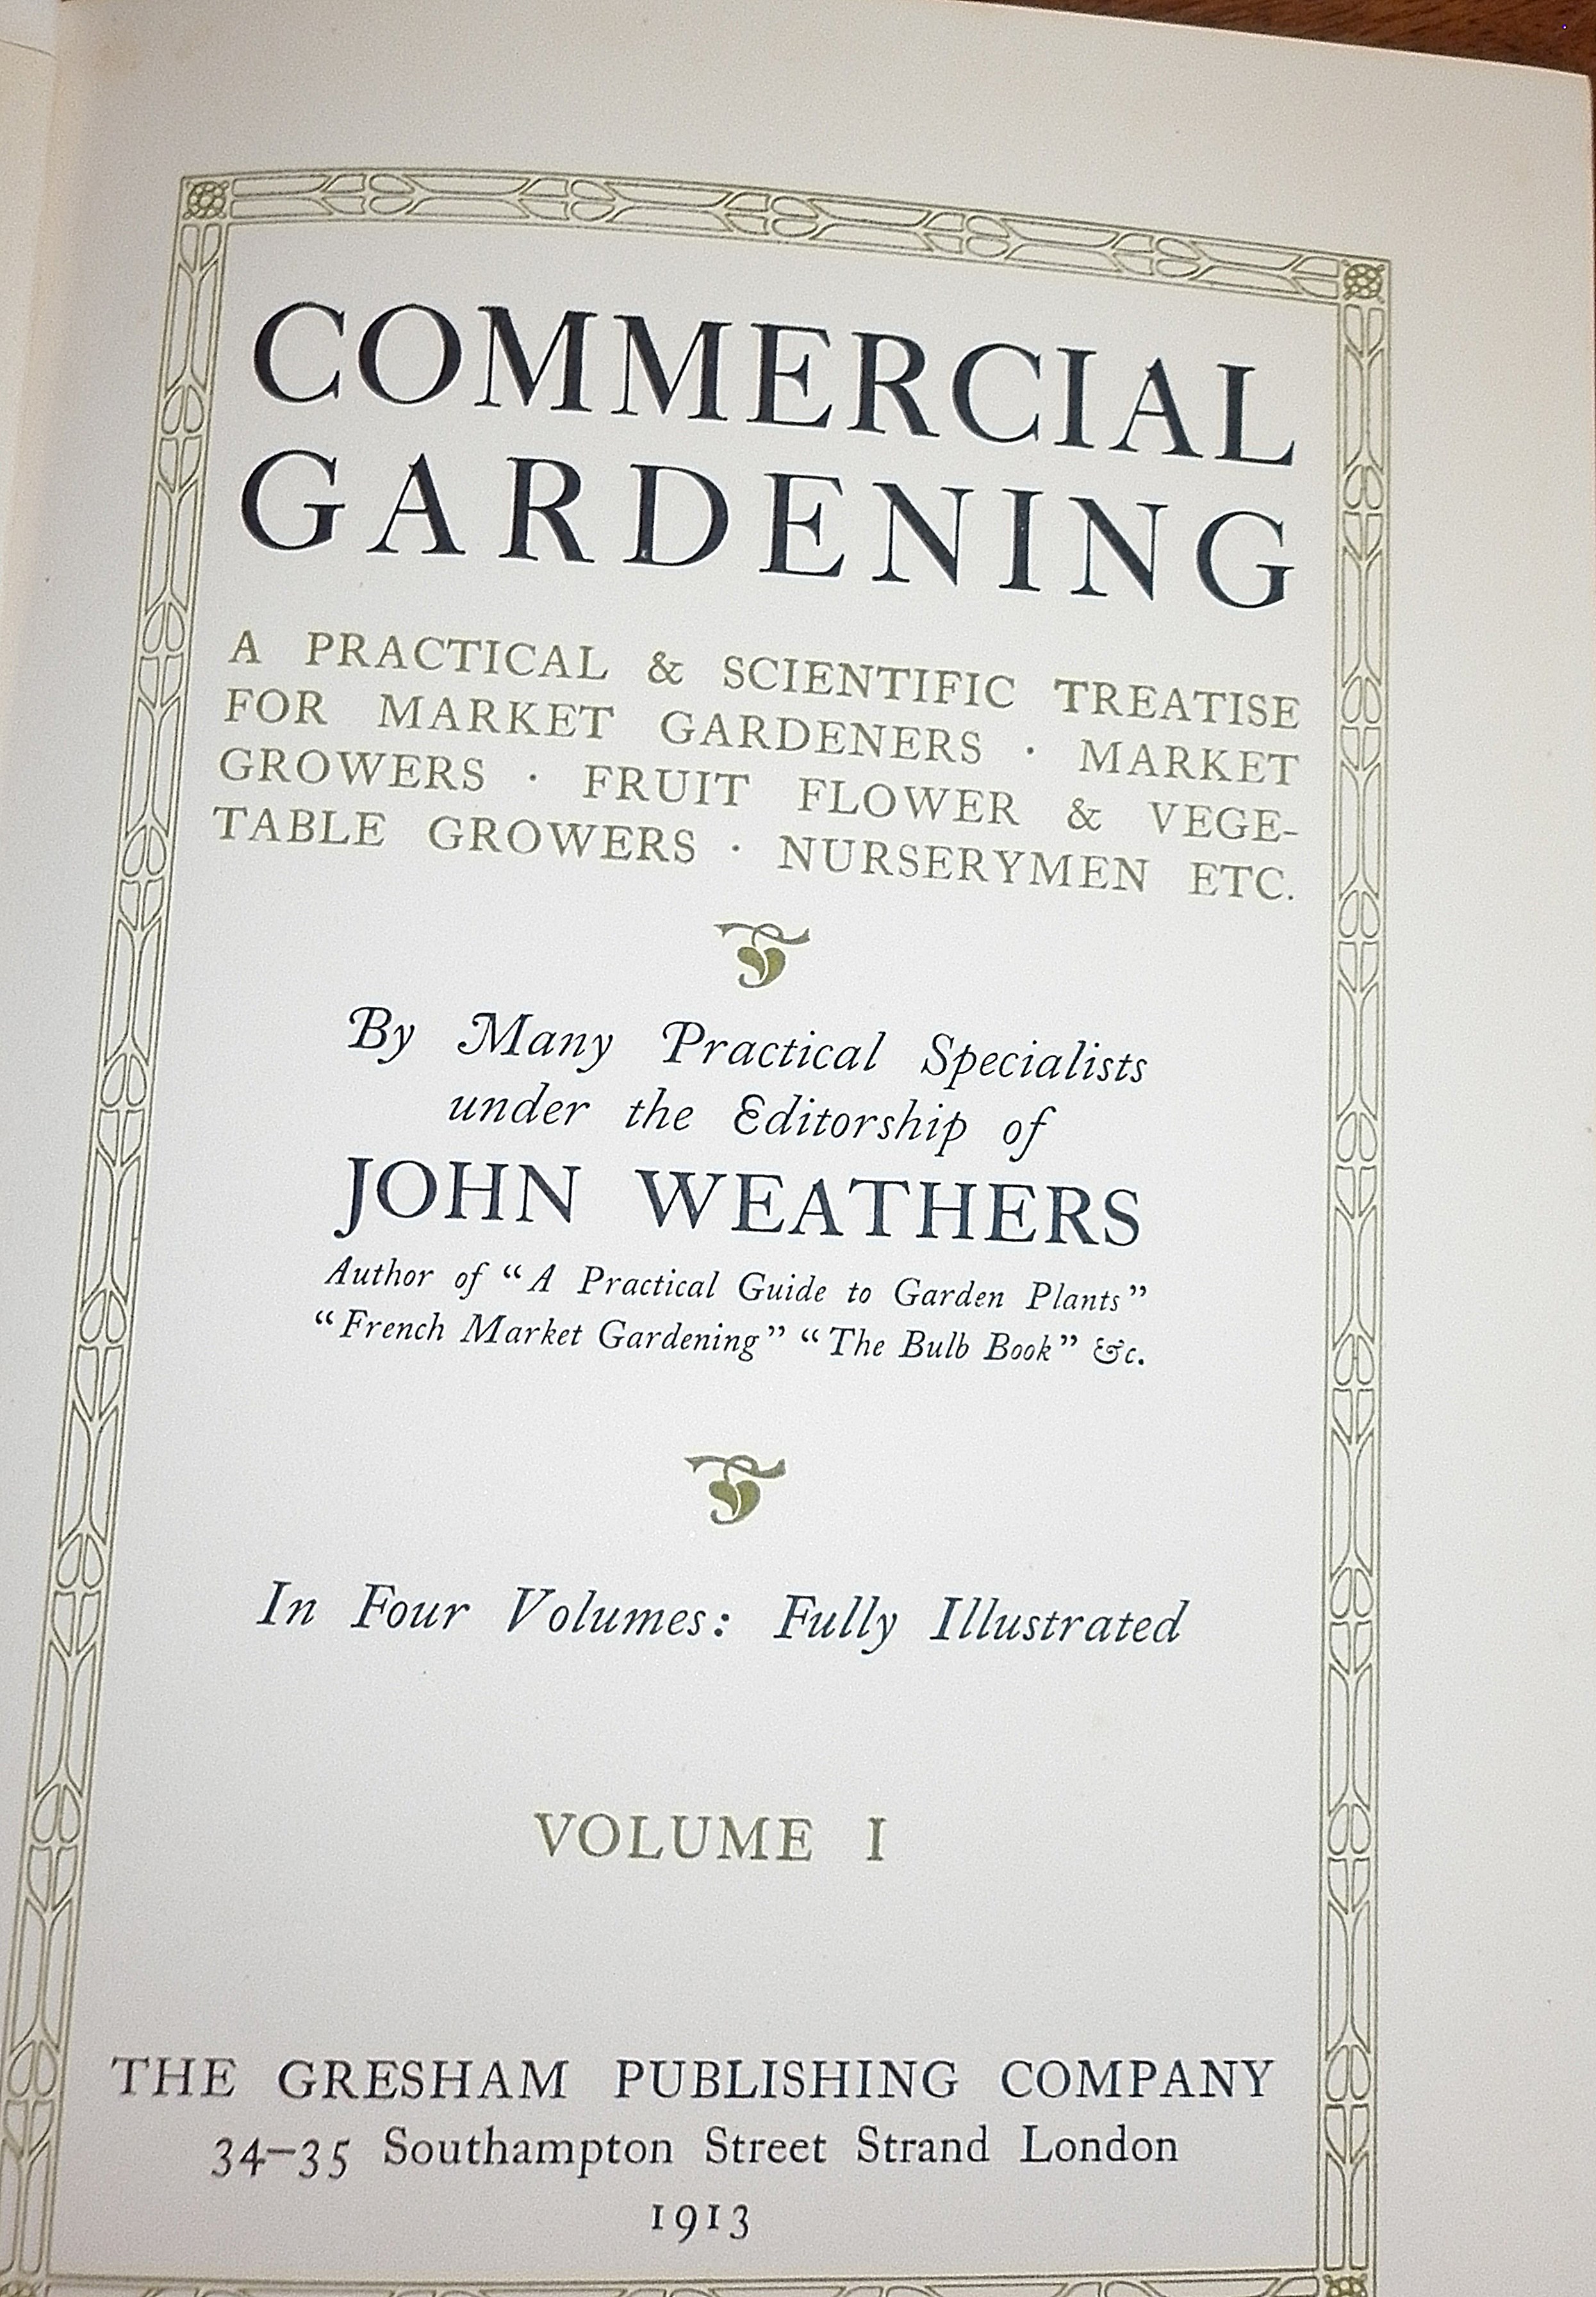 Commercial Gardening edited by John Weathers, 1913, four volumes, pub. The Gresham Publishing - Image 2 of 4